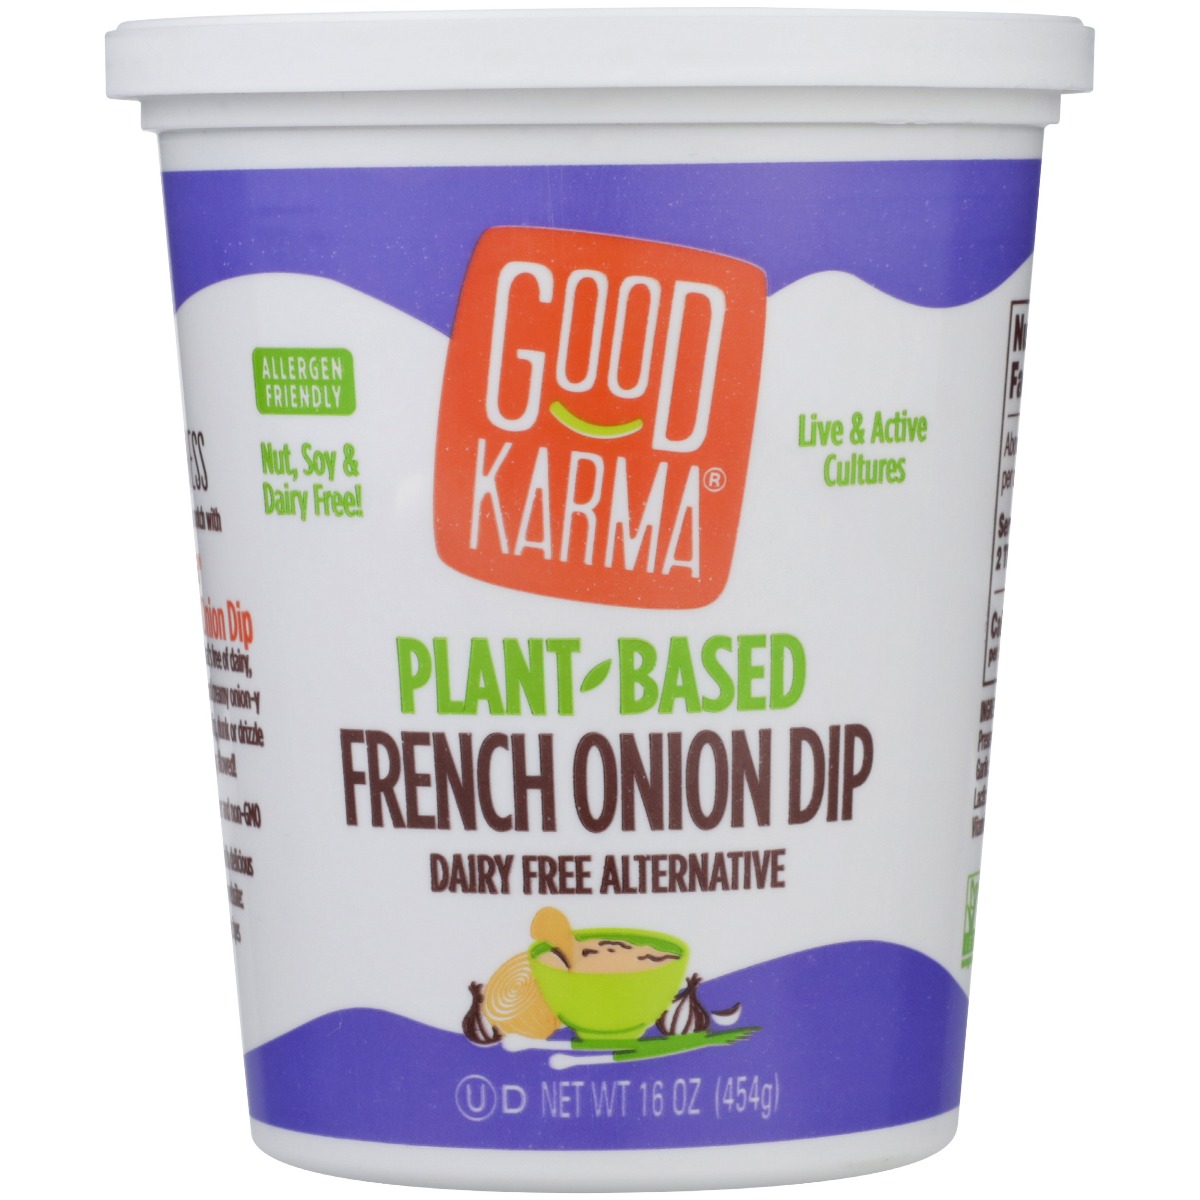 GOOD KARMA: Plant-Based French Onion Dip, 16 oz - 0829462503030